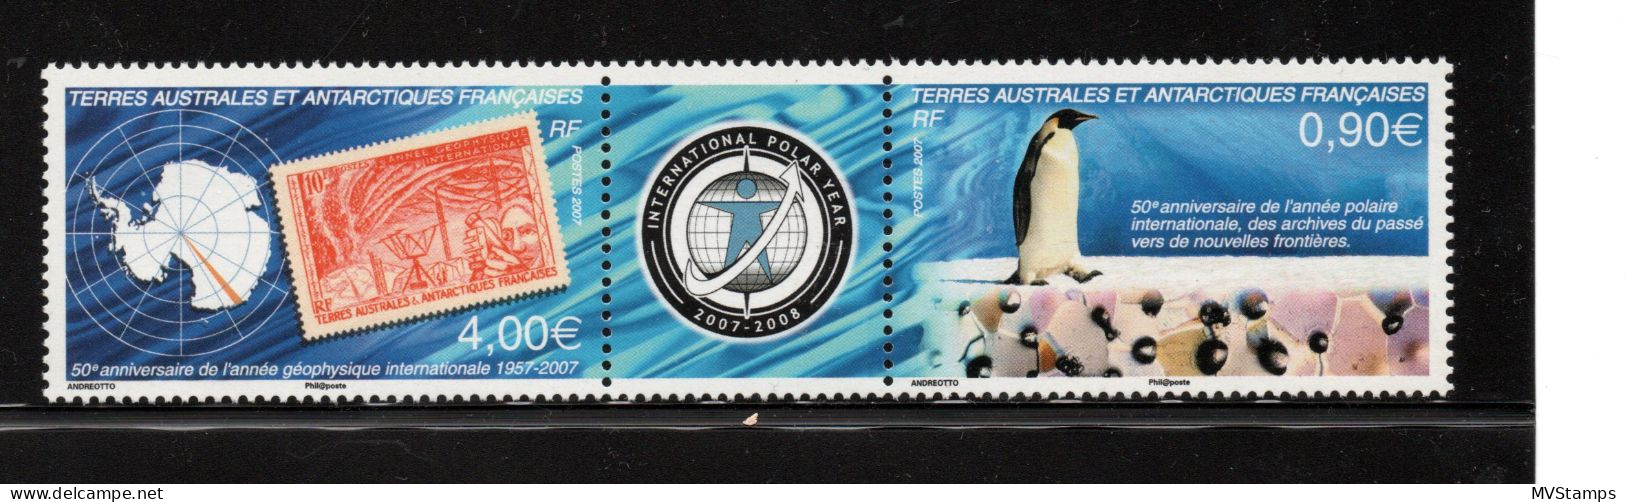 TAAF Antarctica (France) 2007 Set Pinquin/Birds/Maps Stamps (Michel 621/22) Nice MNH - Ongebruikt